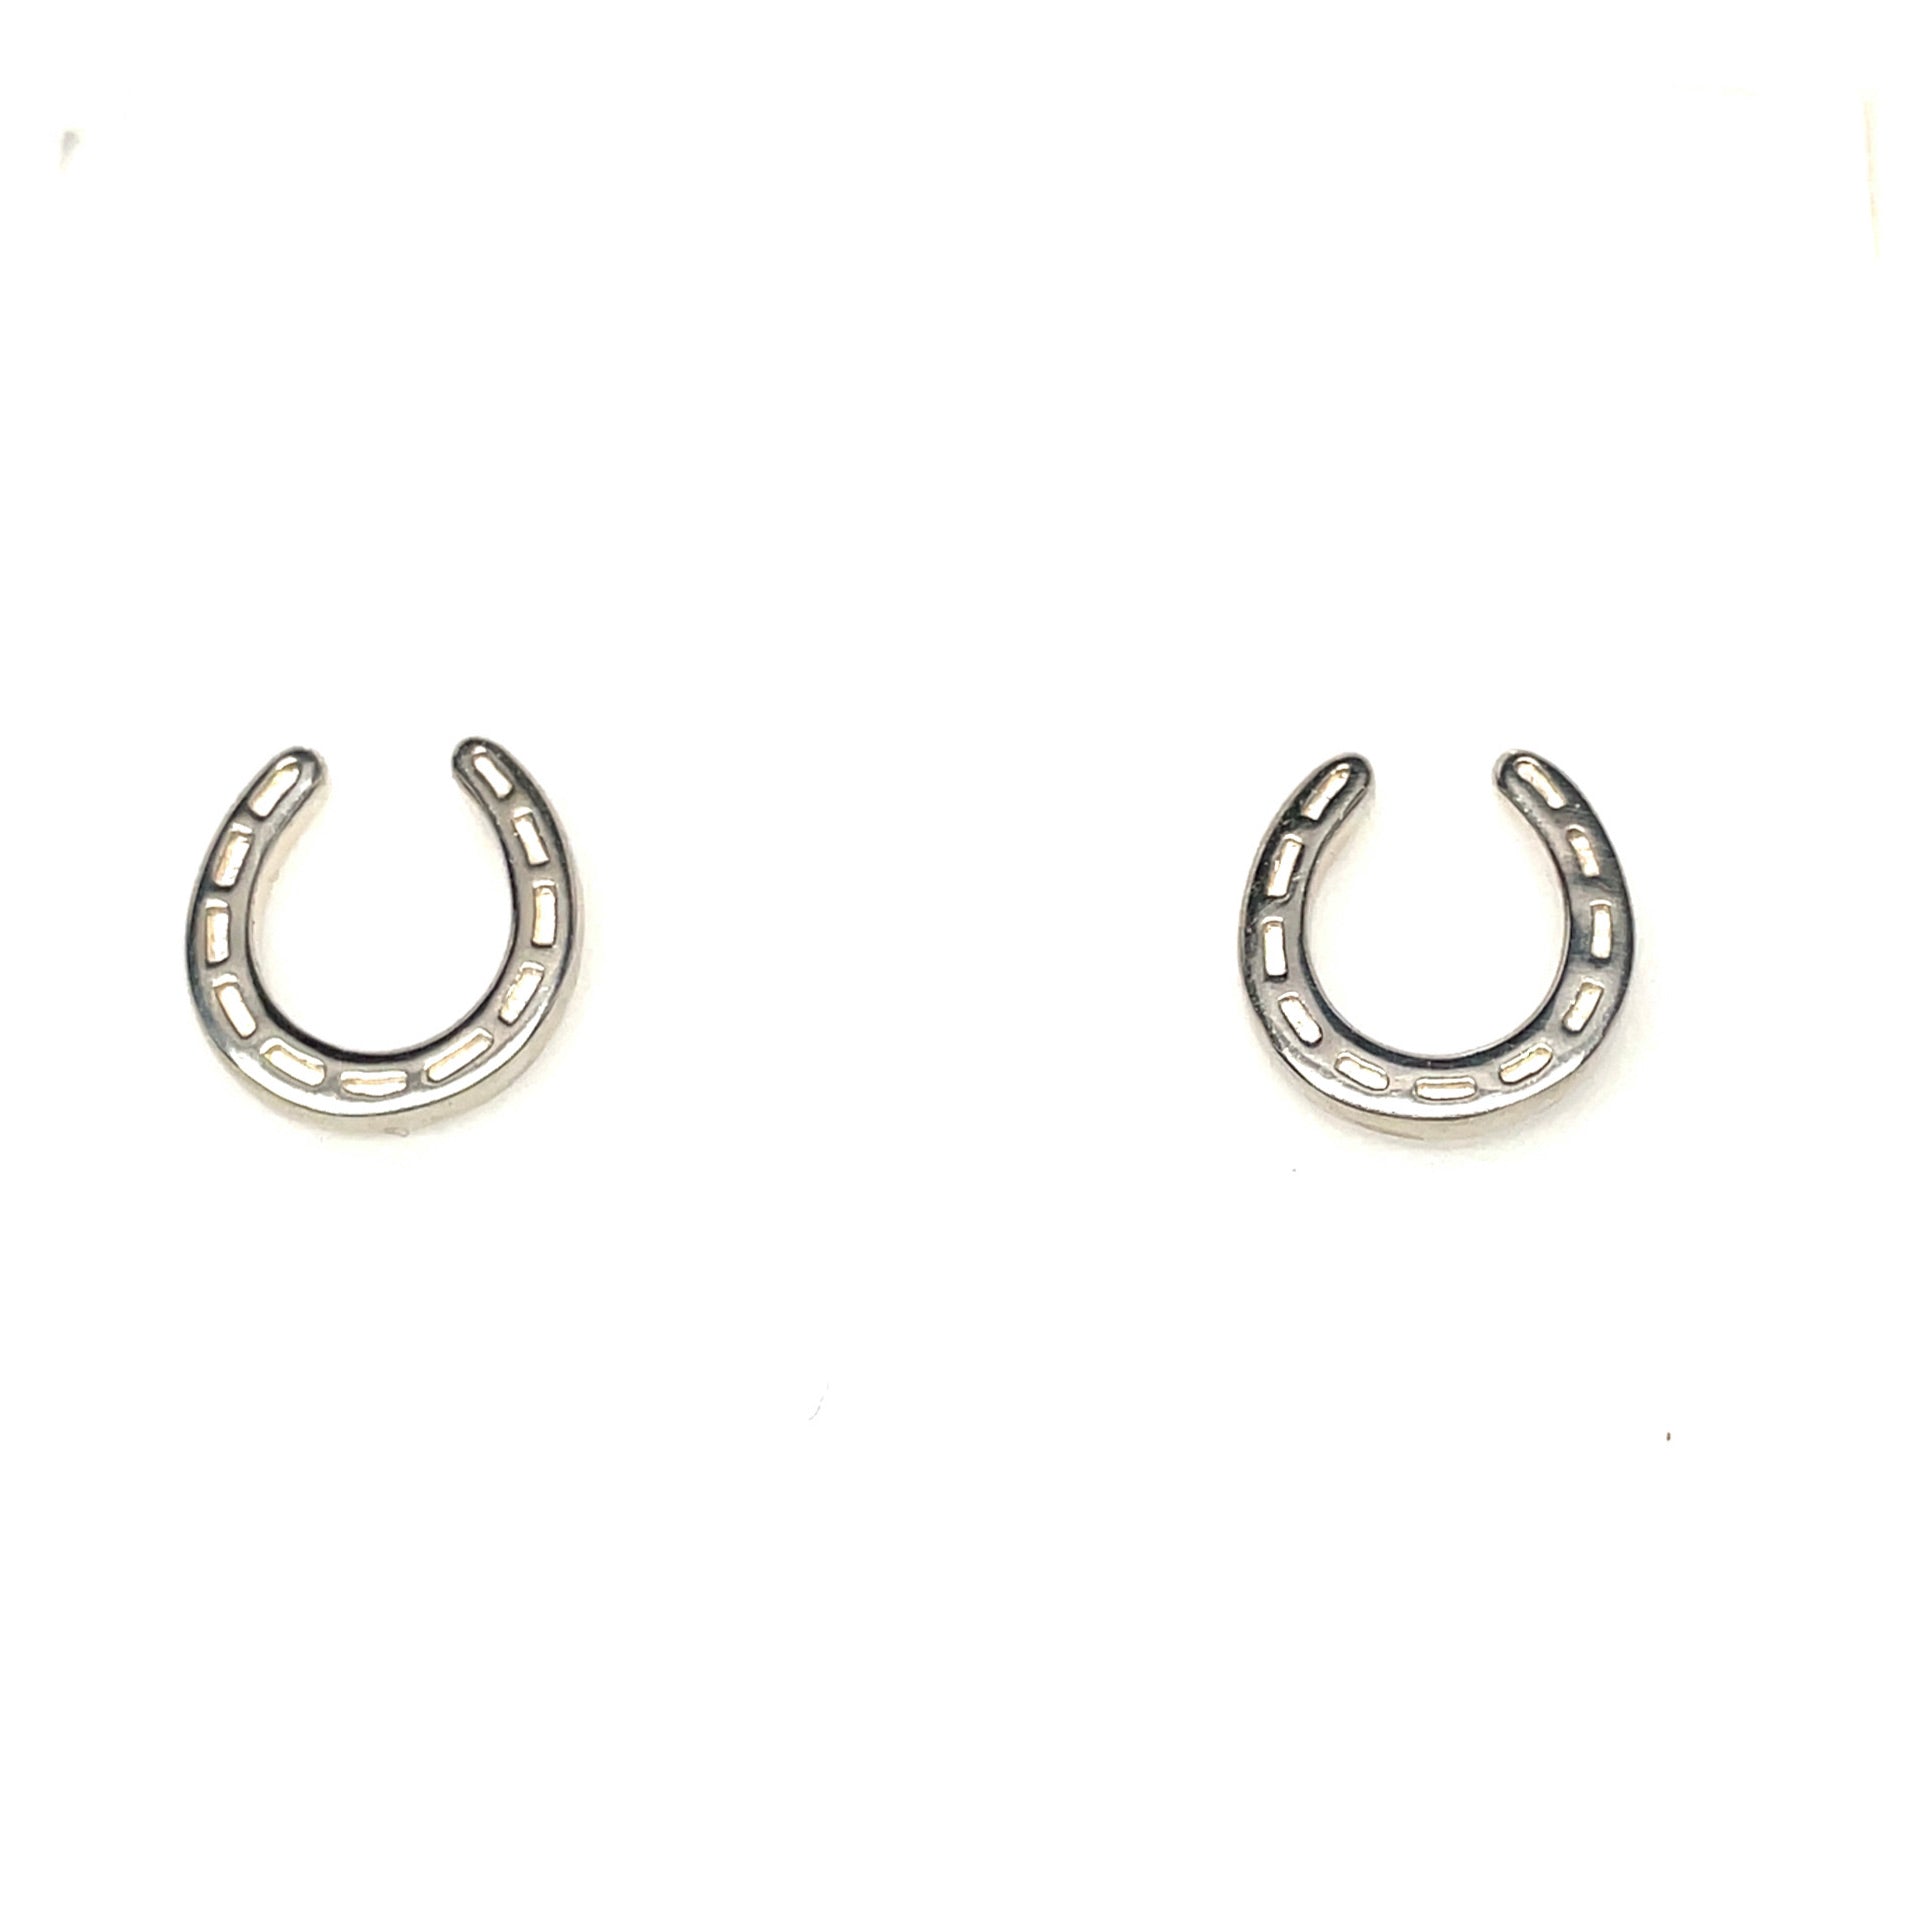 Horseshoe earring studs